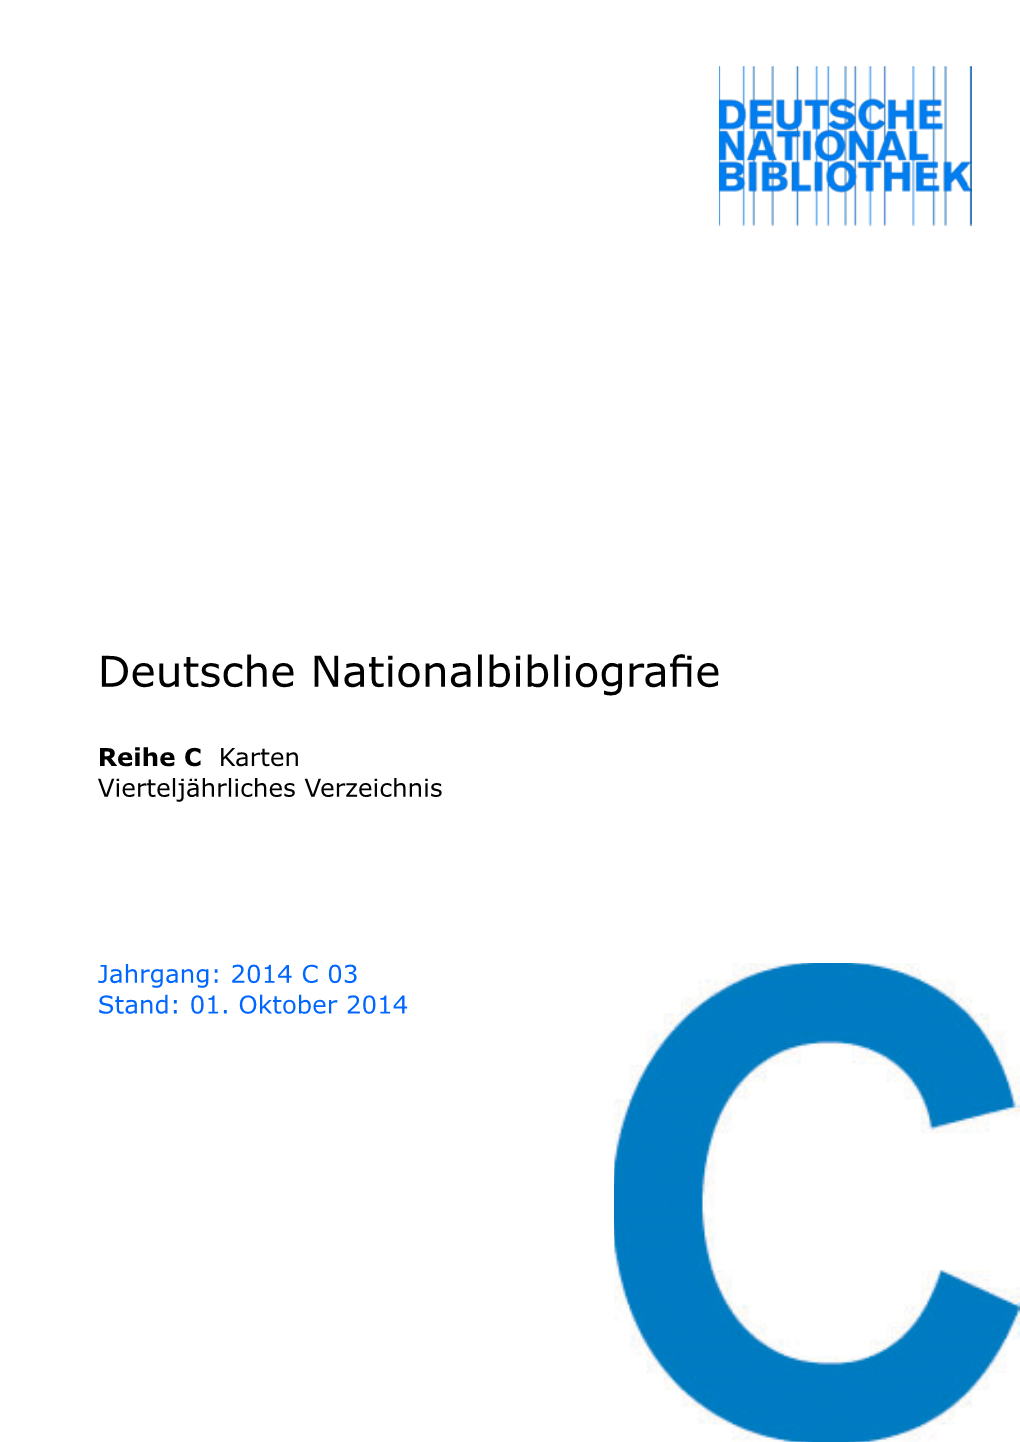 Deutsche Nationalbibliografie 2014 C 03